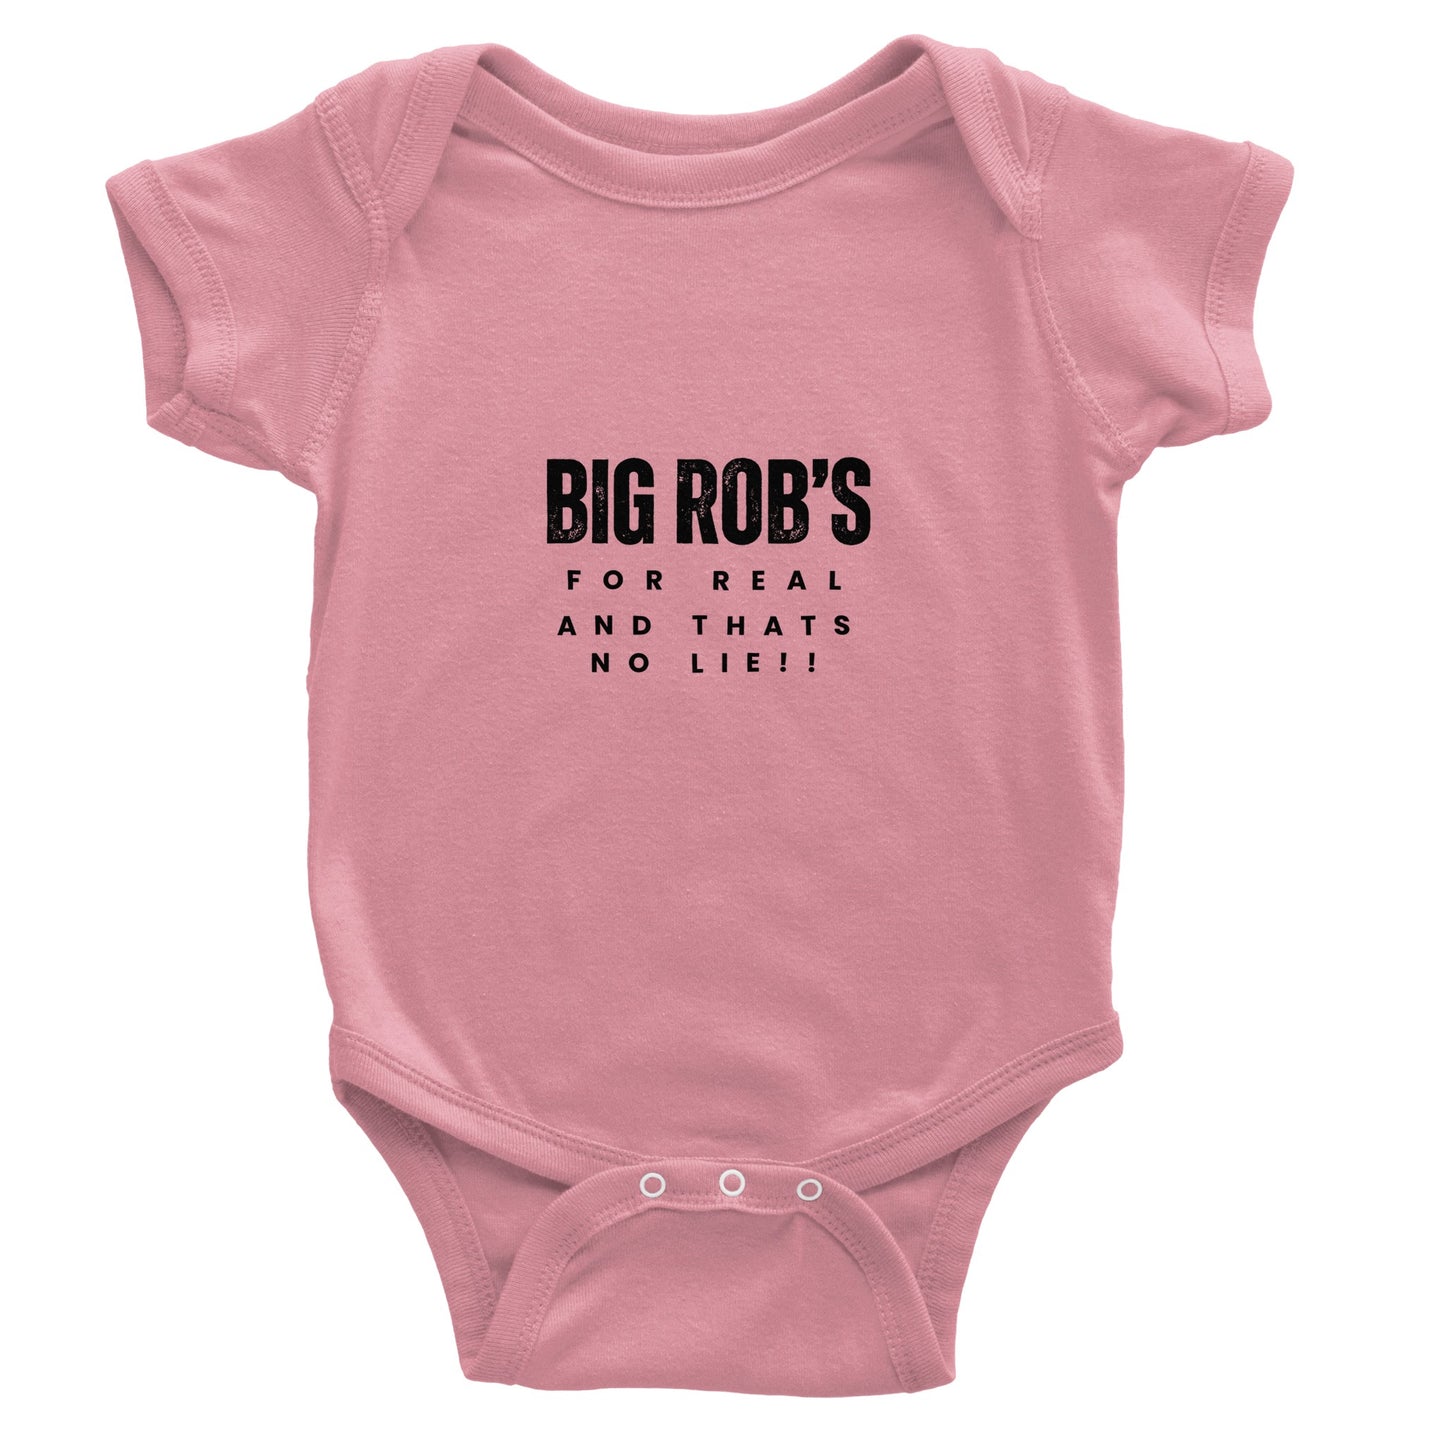 Kids & baby clothing